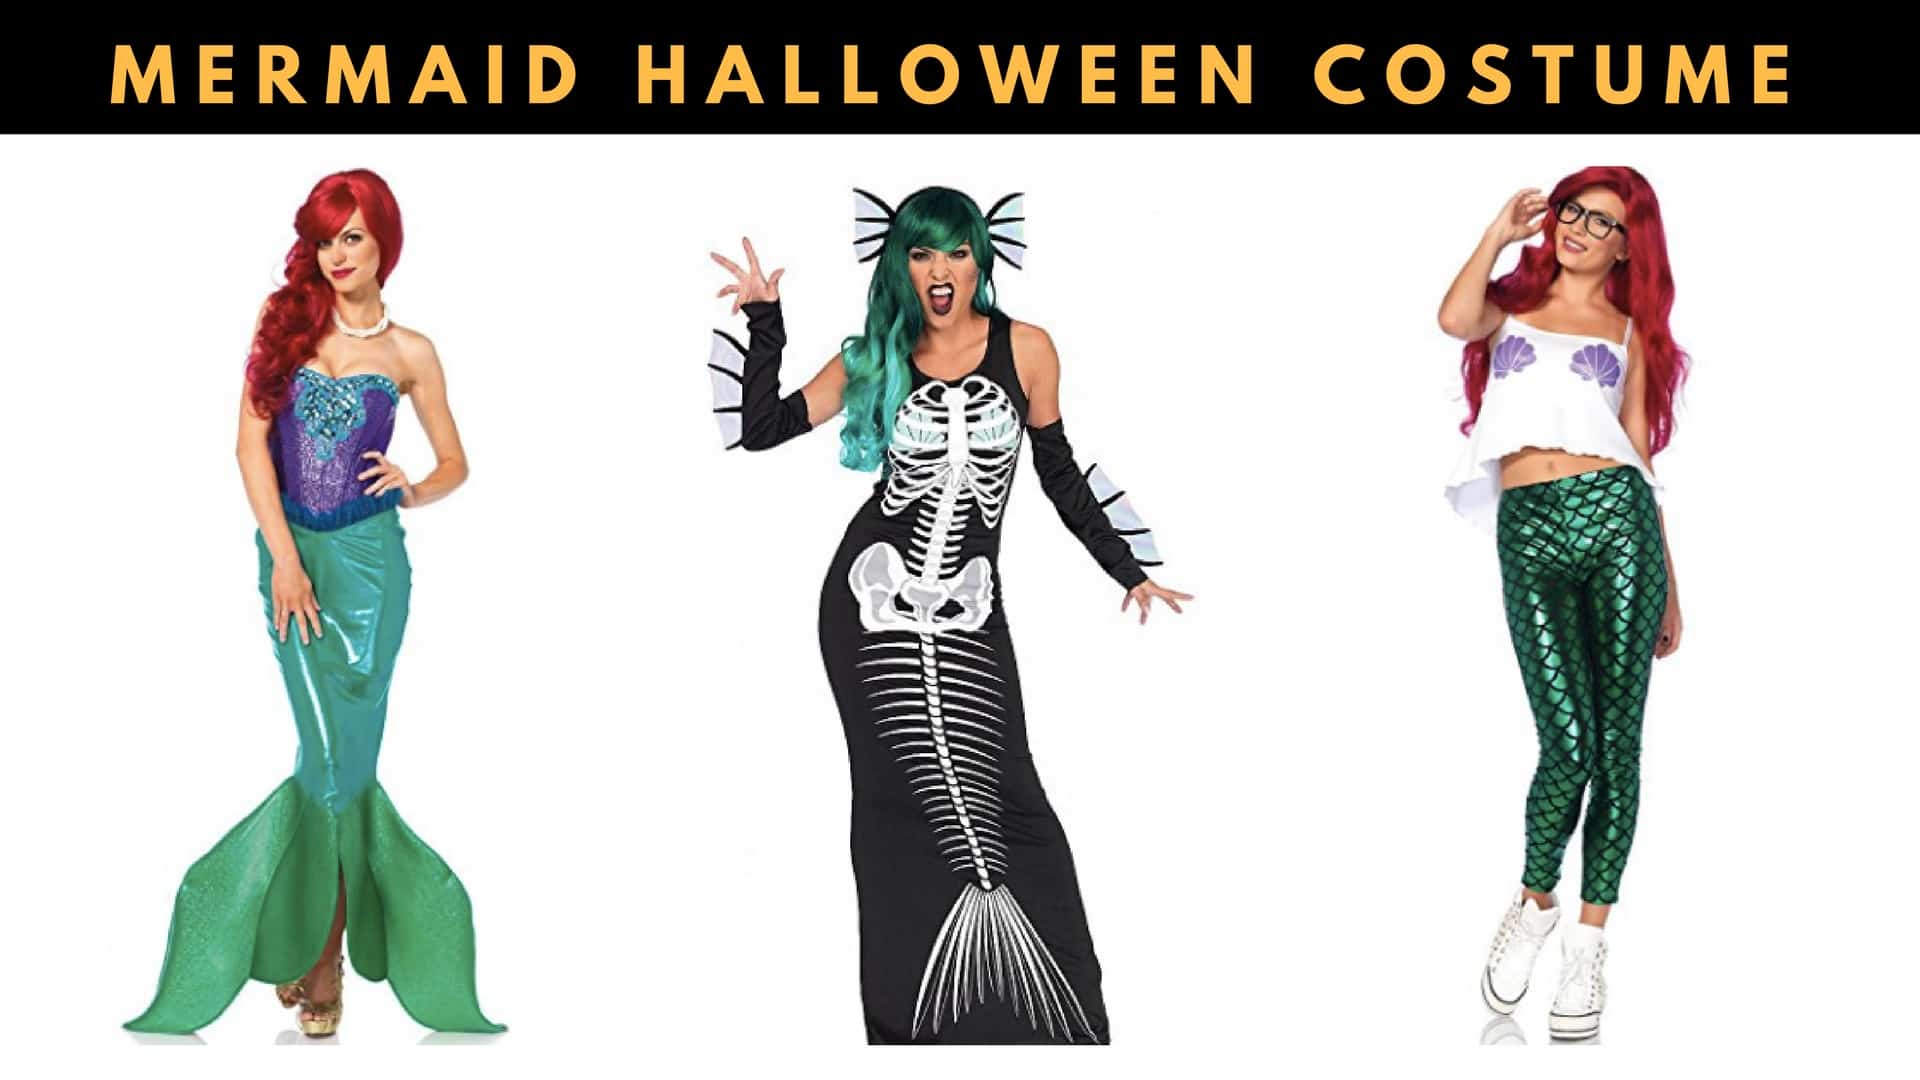 Green Mermaid Shell Bra Top Costume Accessory